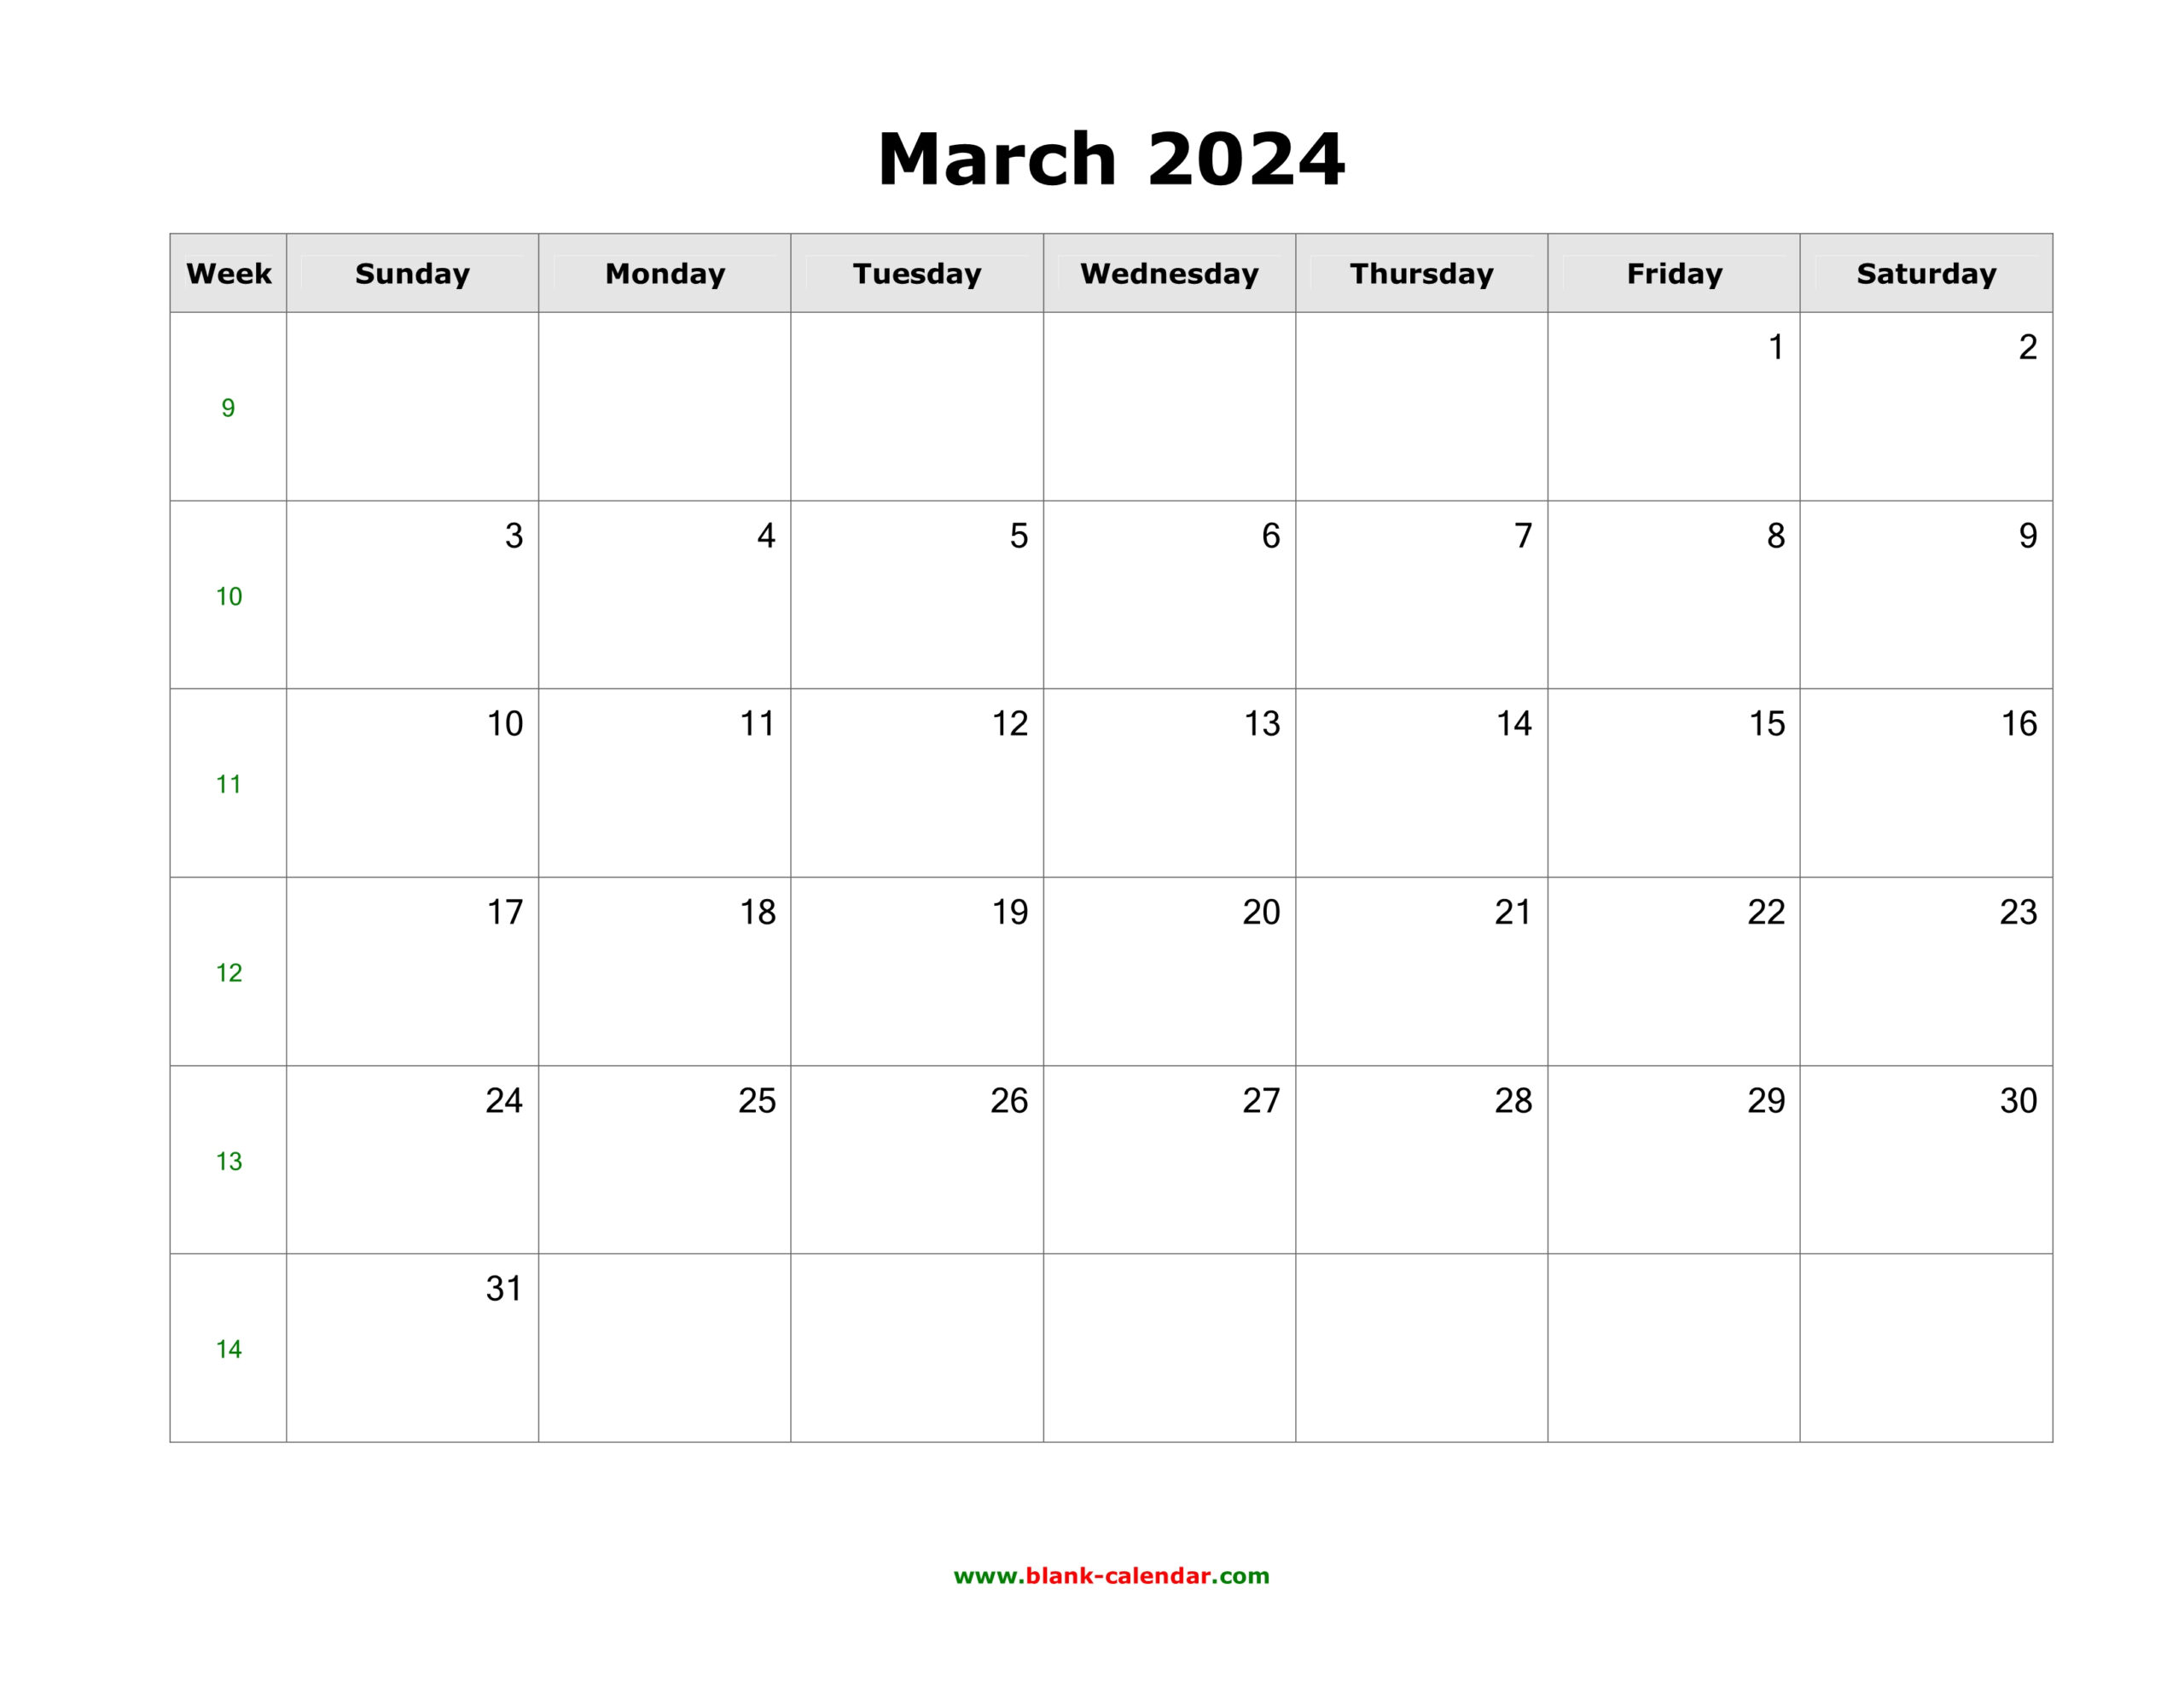 March 2024 Blank Calendar | Free Download Calendar Templates for Google Calendar March 2024 Printable